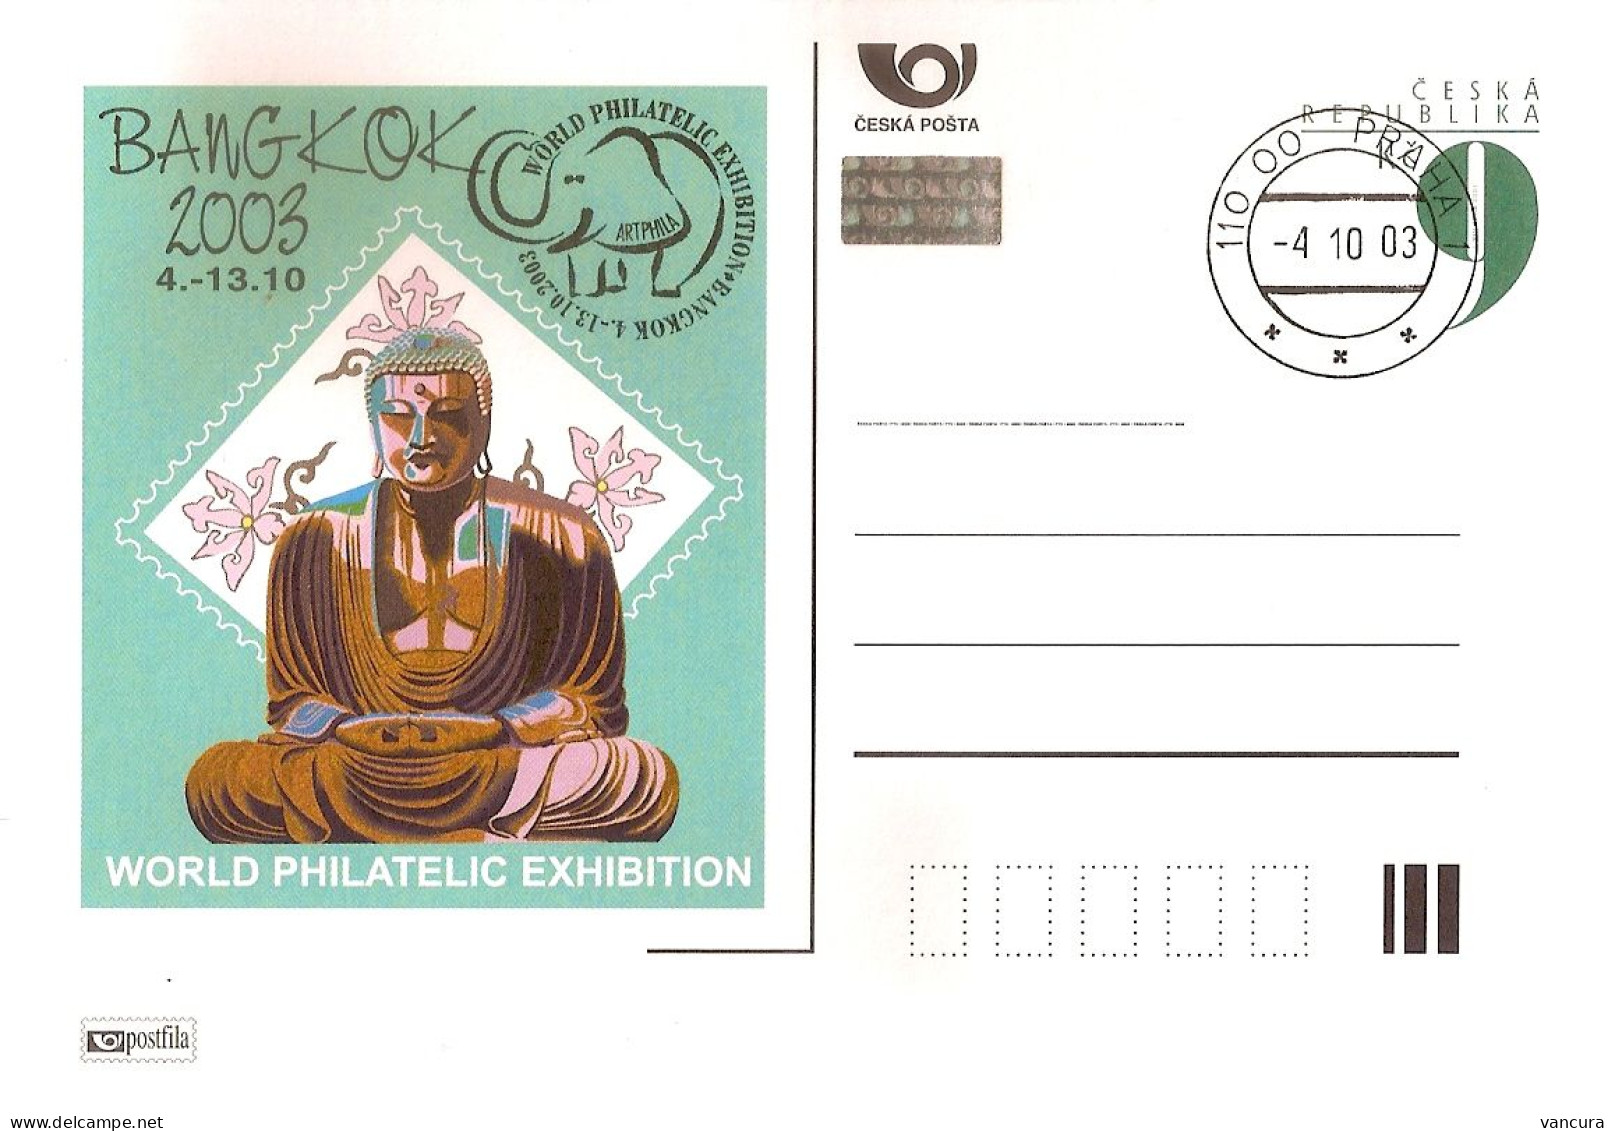 CDV A 92 Czech Republic Bangkog Stamp Exhibition Buddha 2003 The Scan Is Poor, But The Card Is OK! - Ansichtskarten